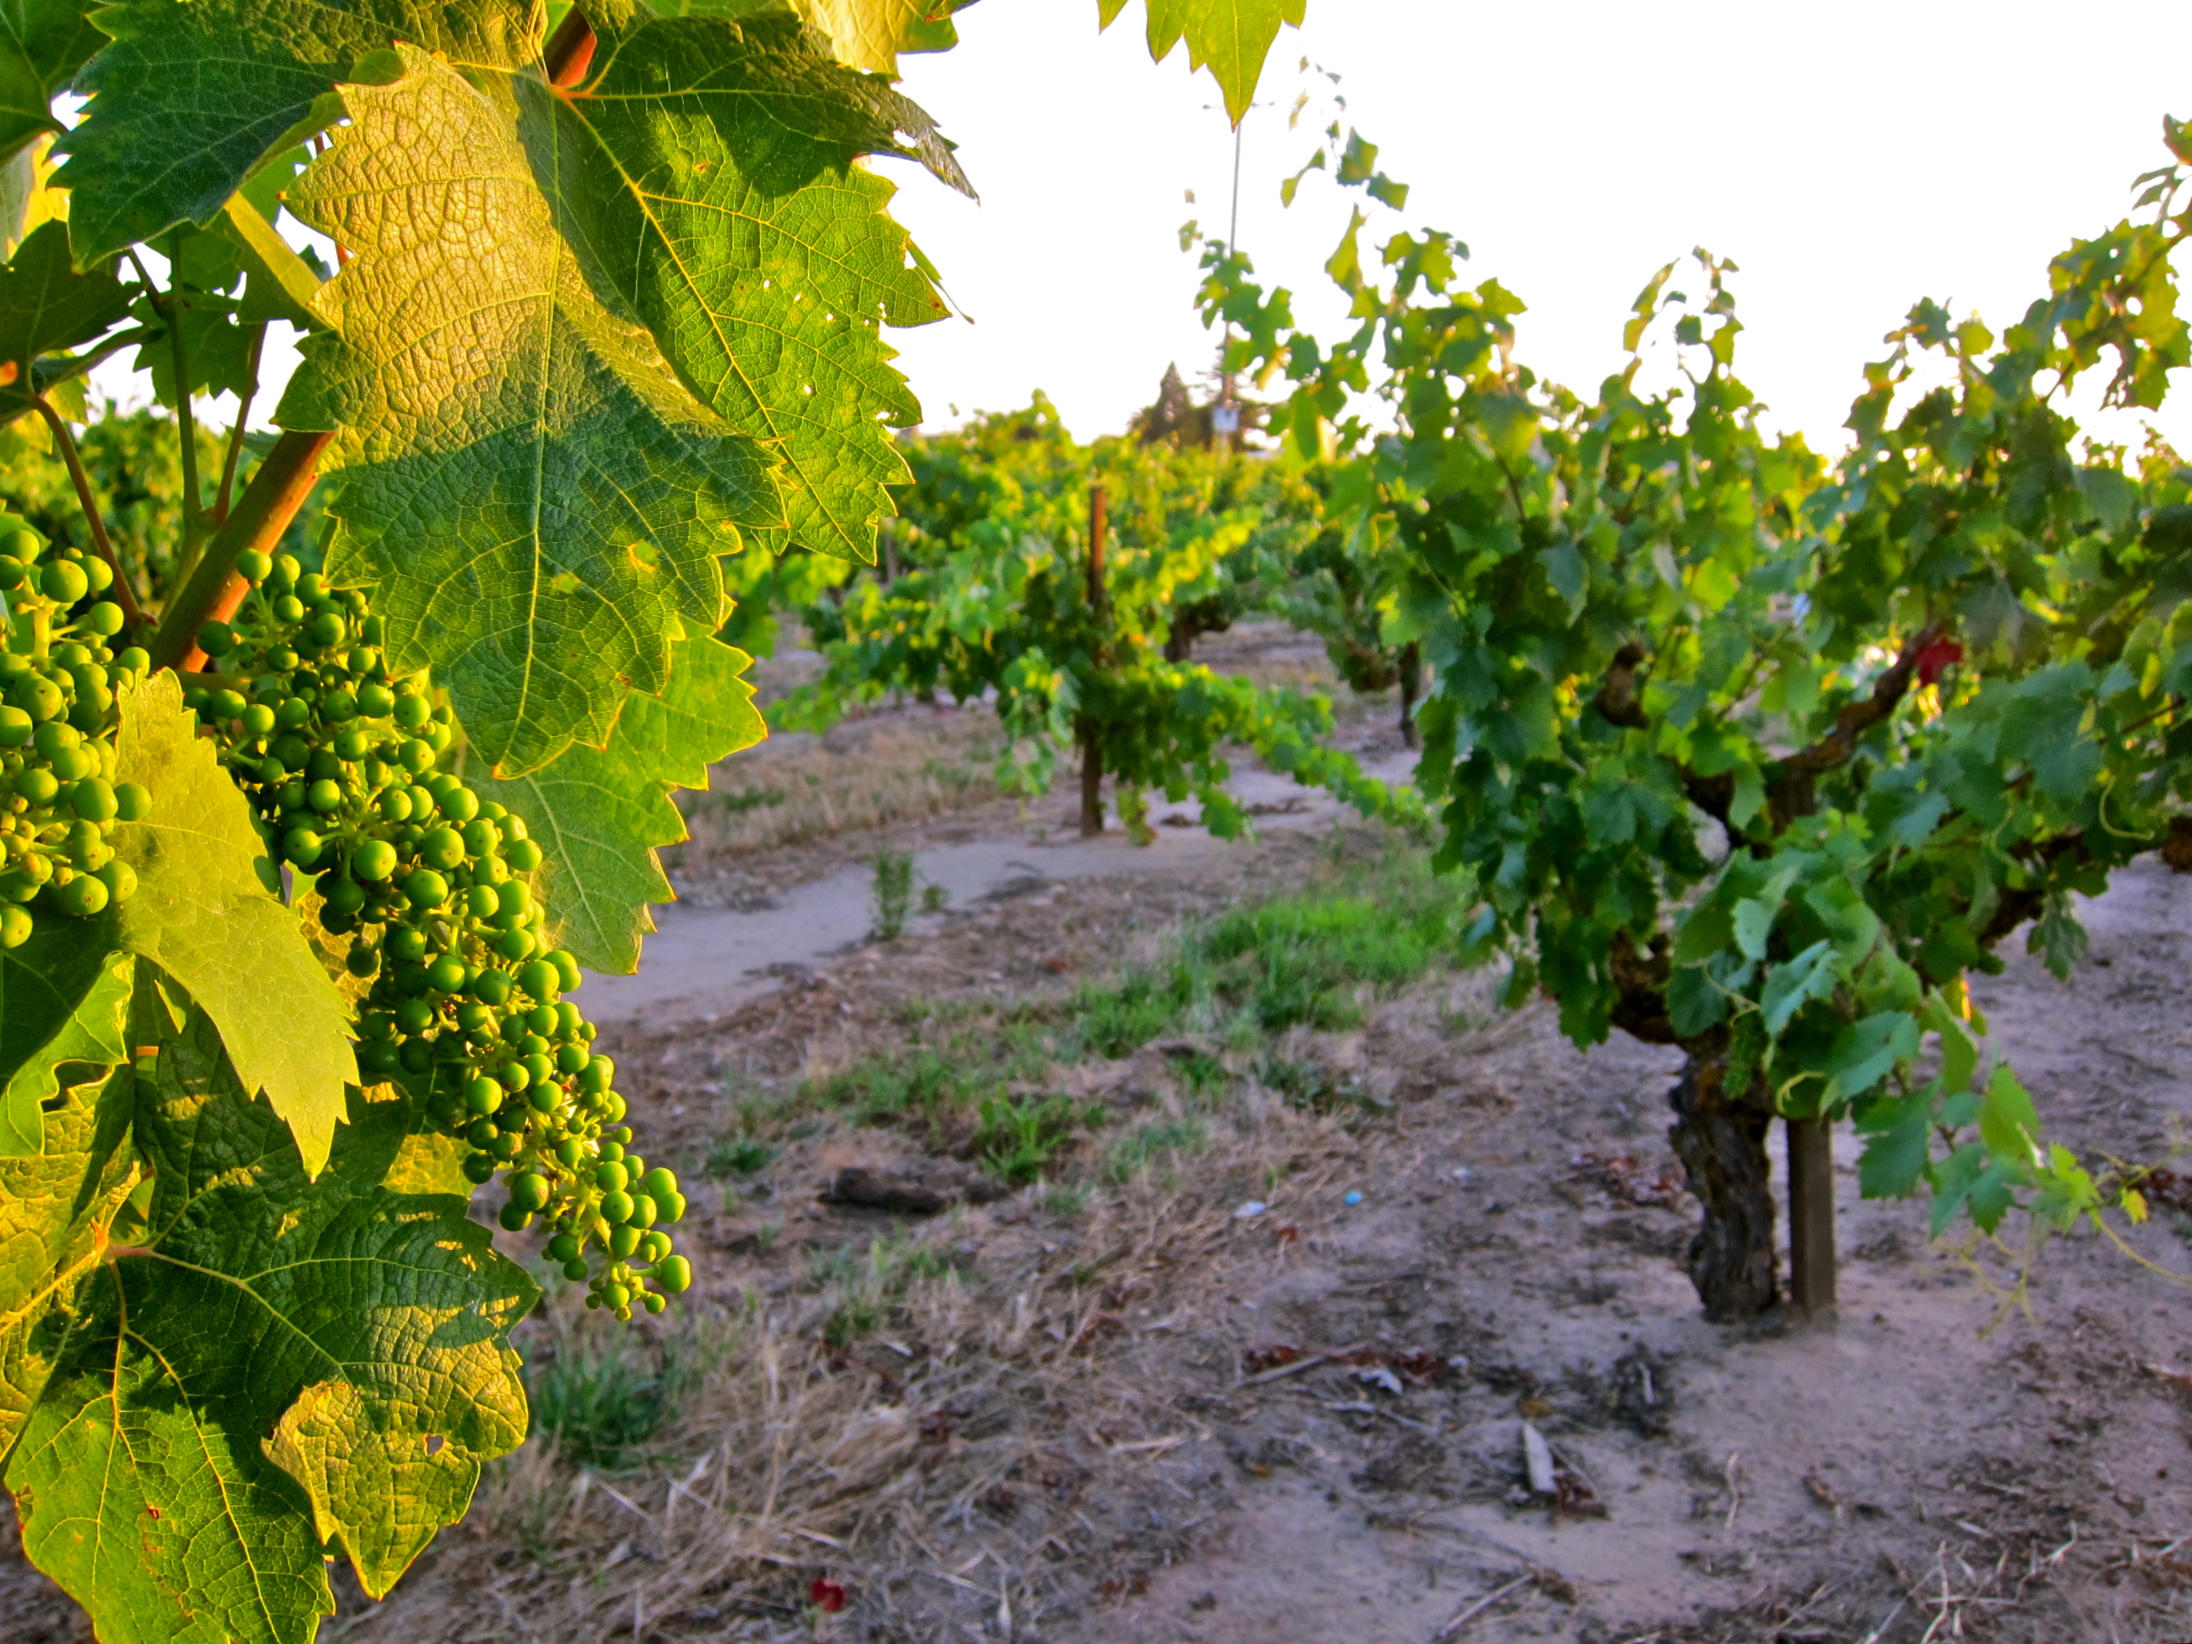 Update on 2011 Lodi wine crop